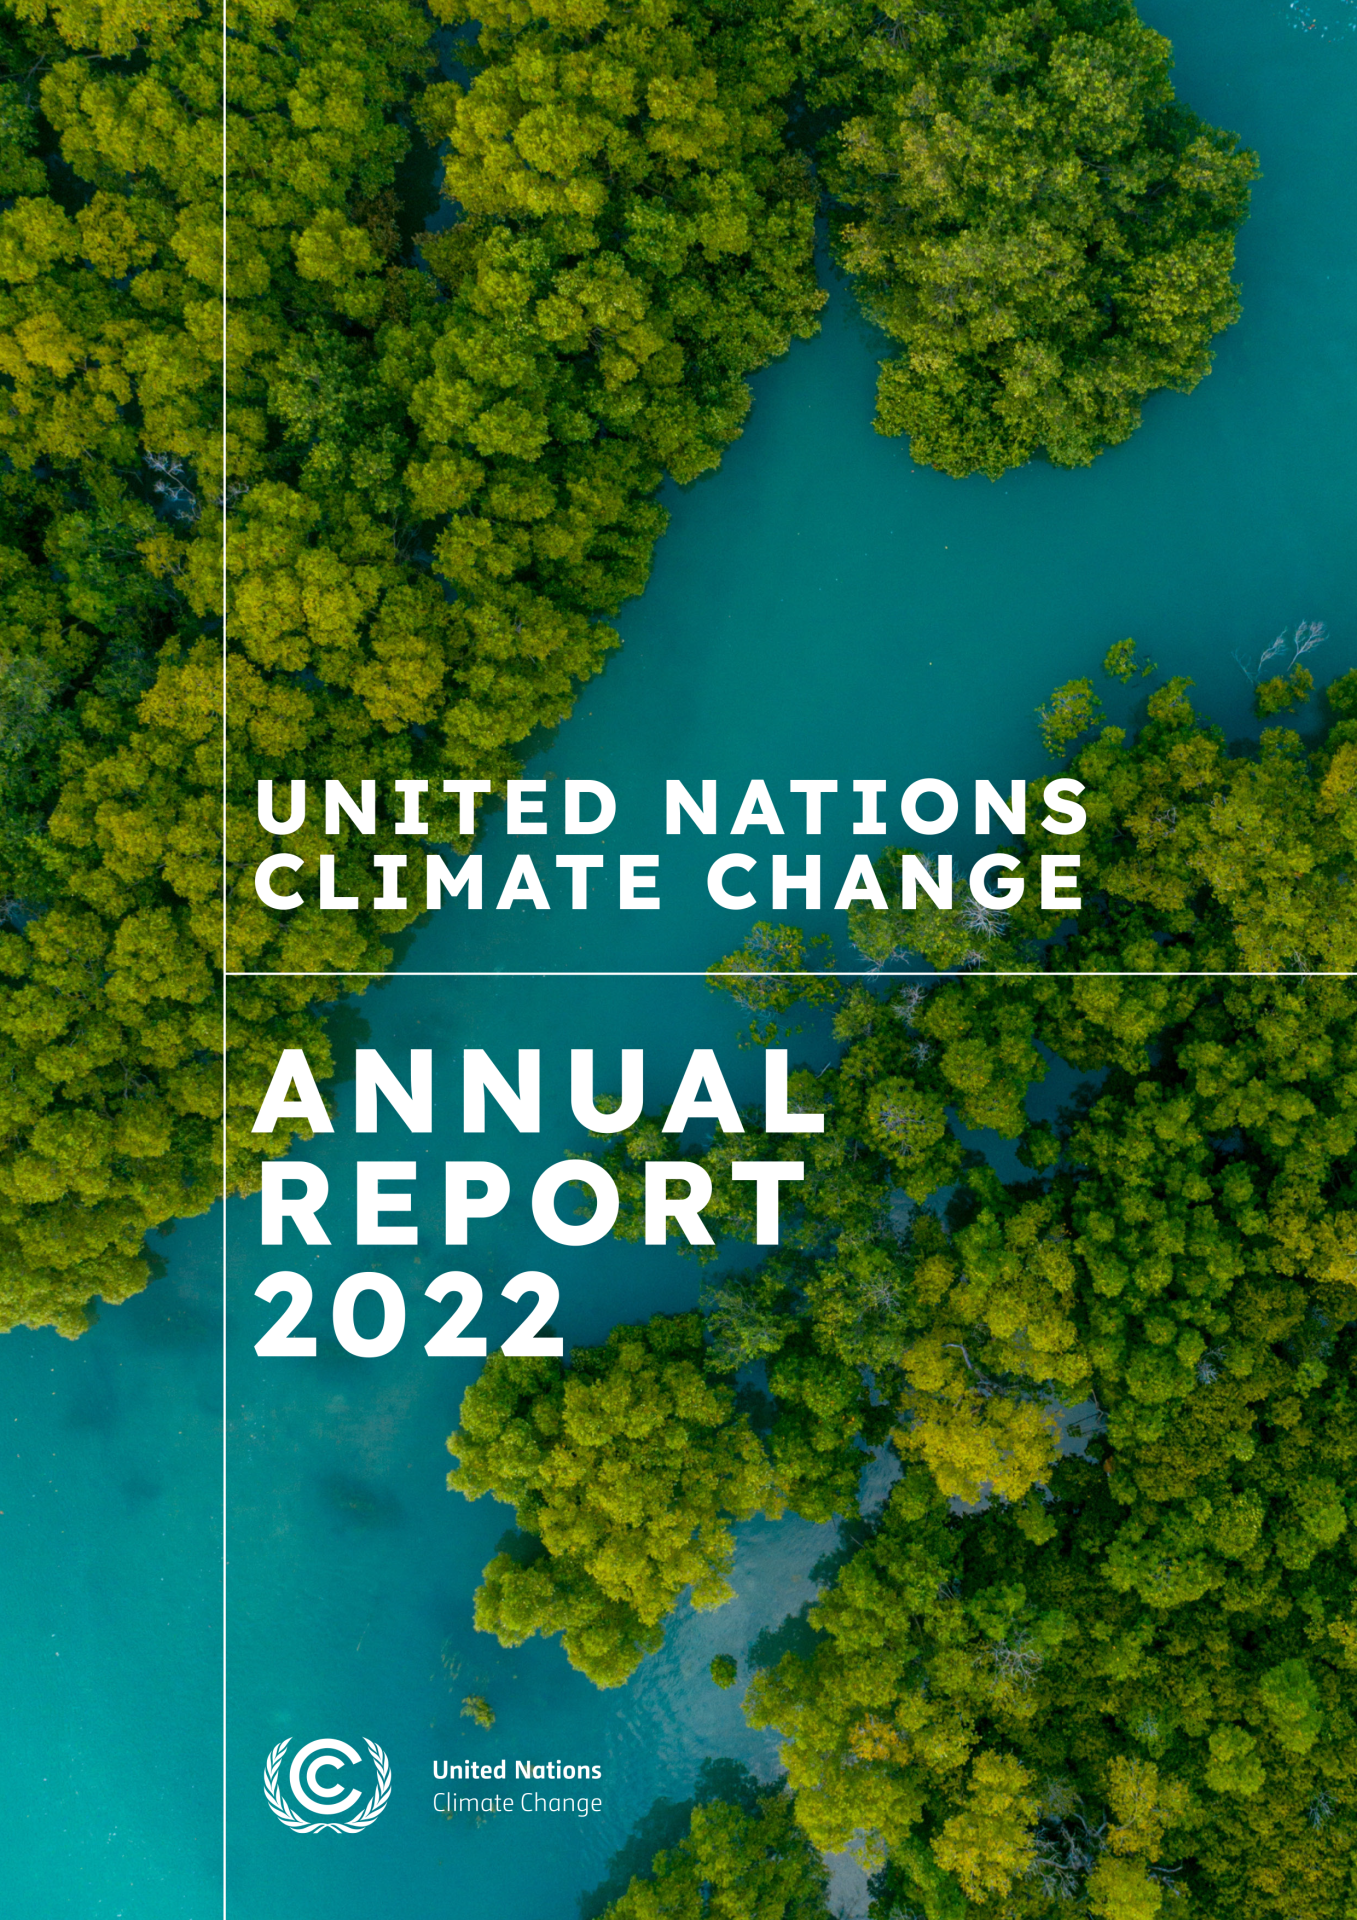 Annual Report 2022 cover